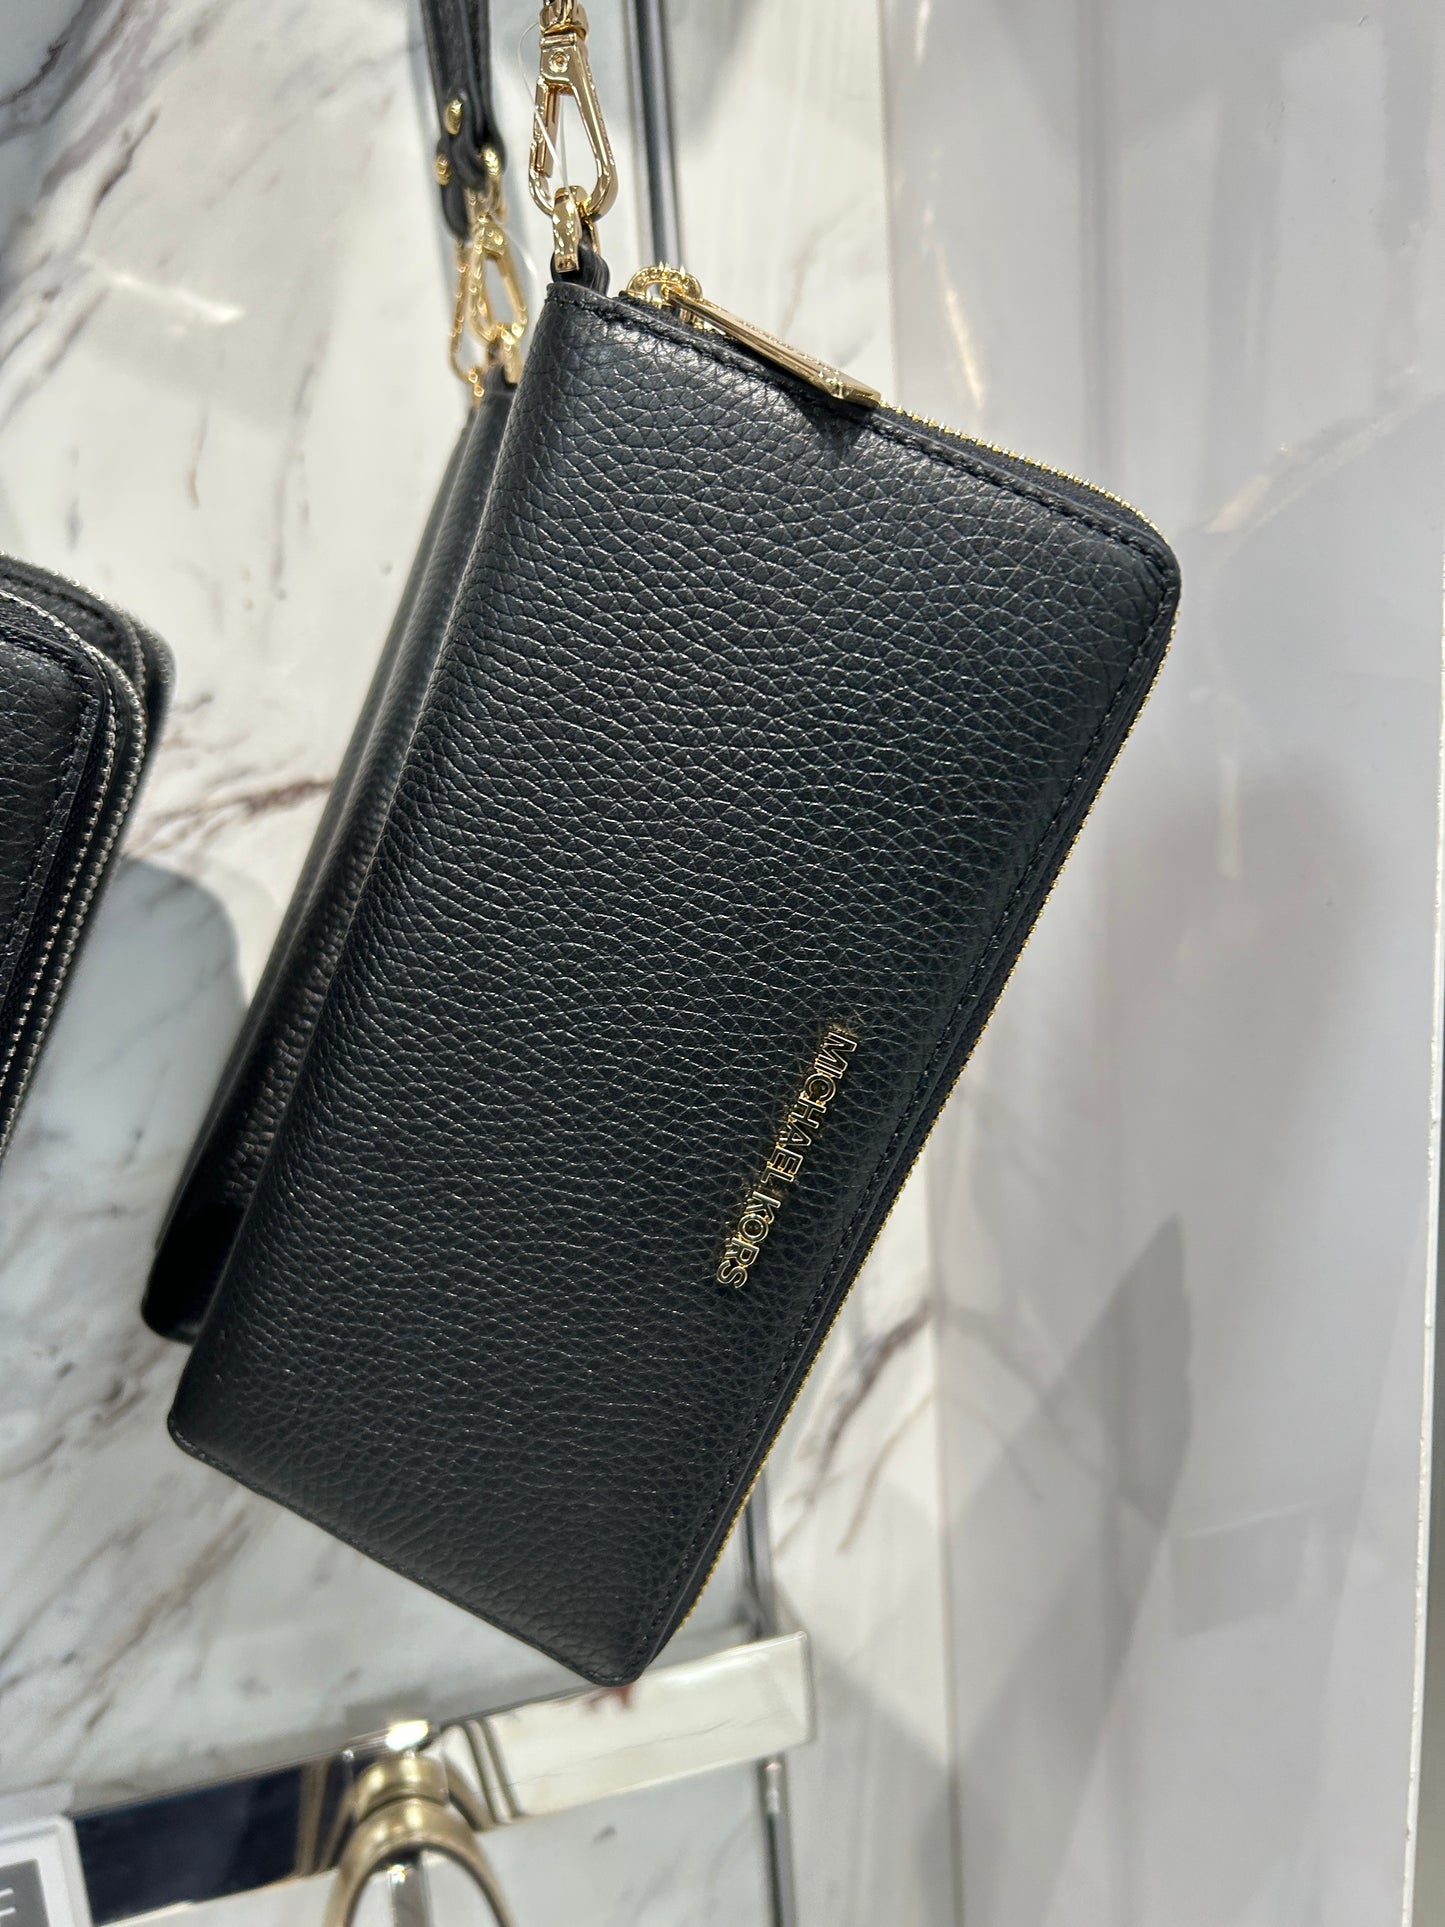 Michael Kors Jet Set Travel Xl Wallet In Black Gold Hardware